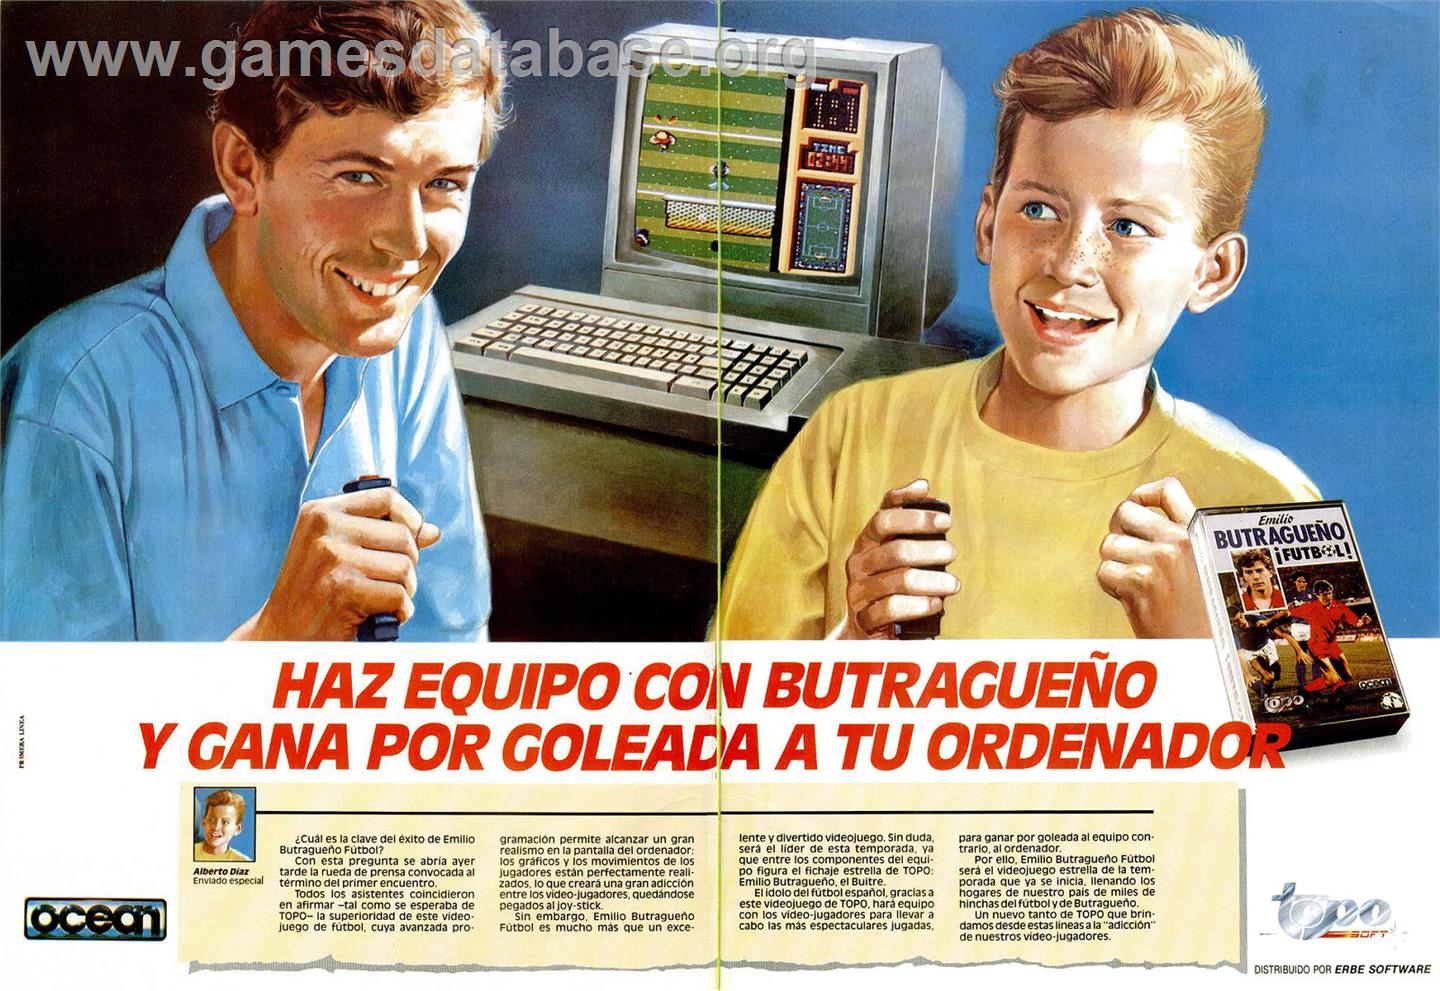 Emilio Butragueño Fútbol - MSX - Artwork - Advert